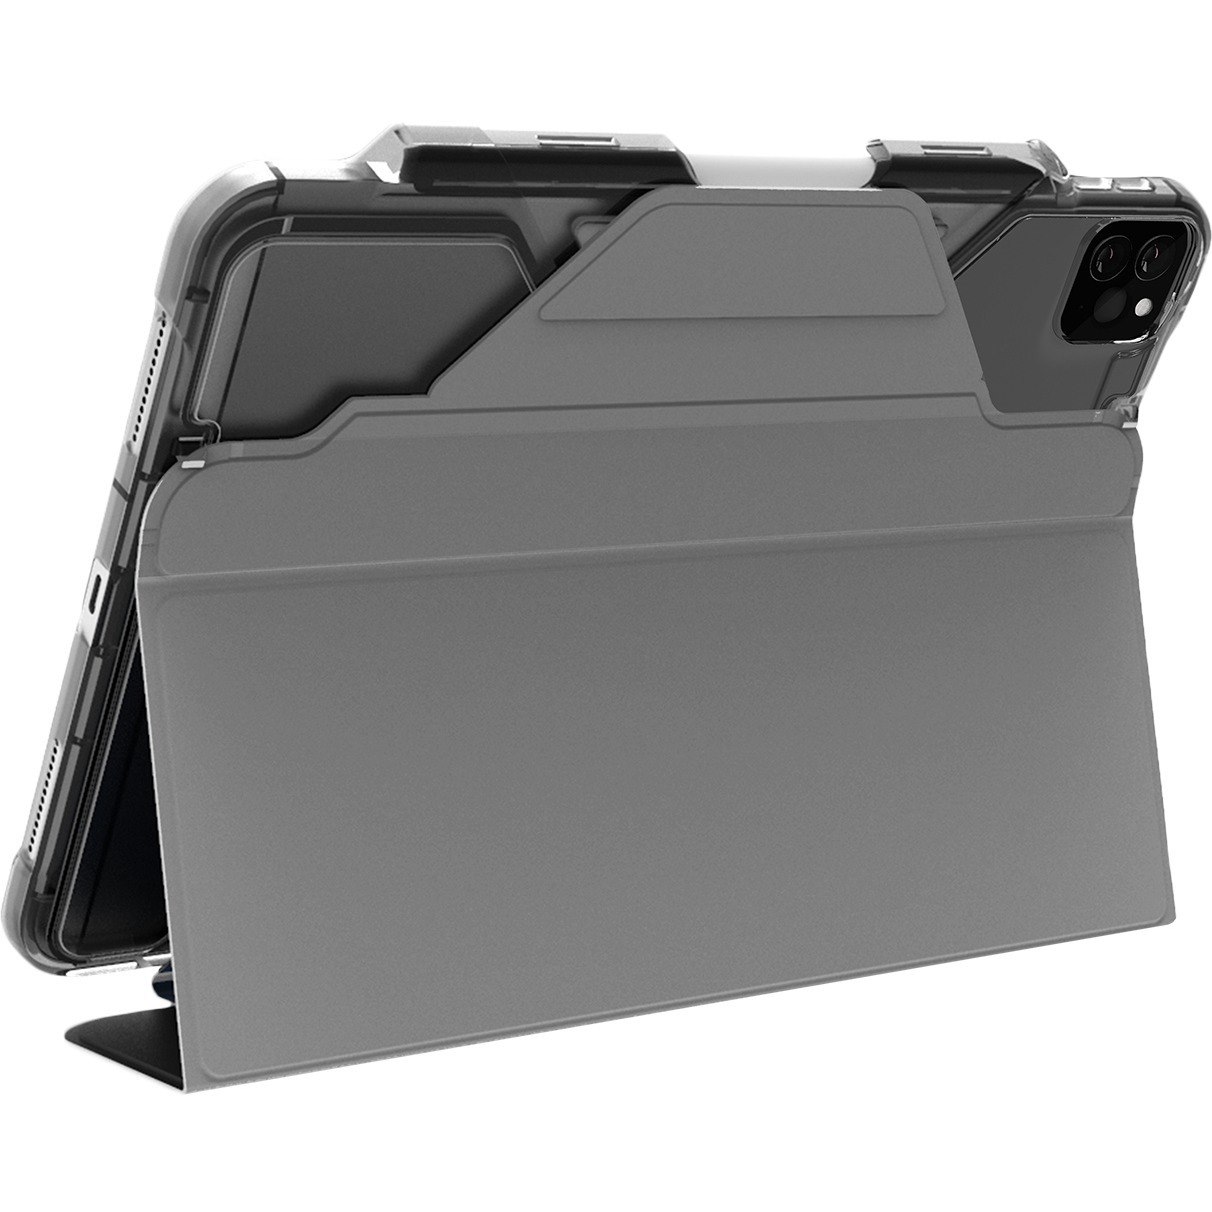 STM Goods Dux Studio Carrying Case for 11" Apple iPad Pro, iPad Pro (2nd Generation), iPad Pro (3rd Generation) Tablet - Black